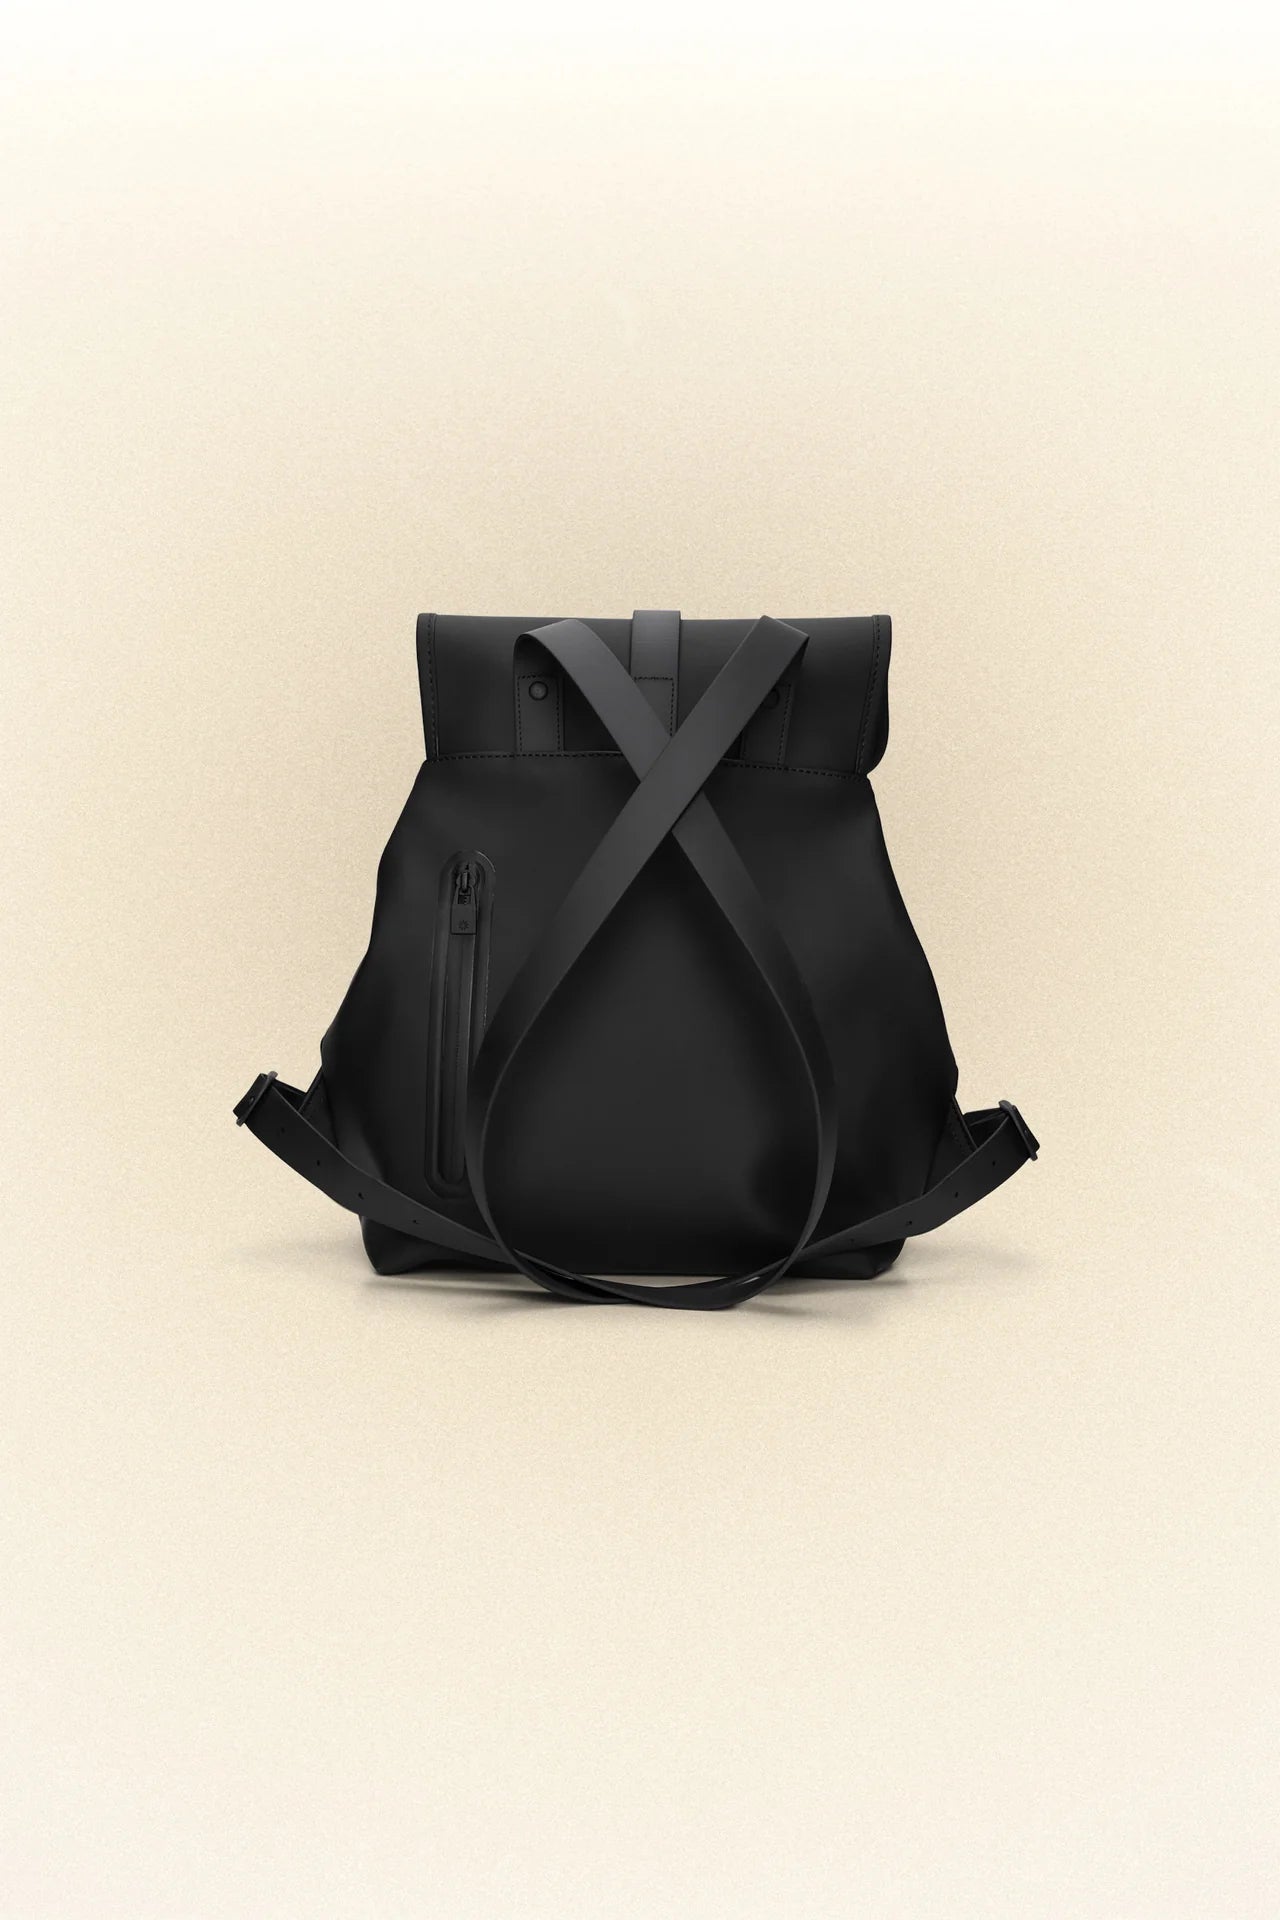 A waterproof black PU coated fabric Bucket Backpack - Black by Rains on a beige background.